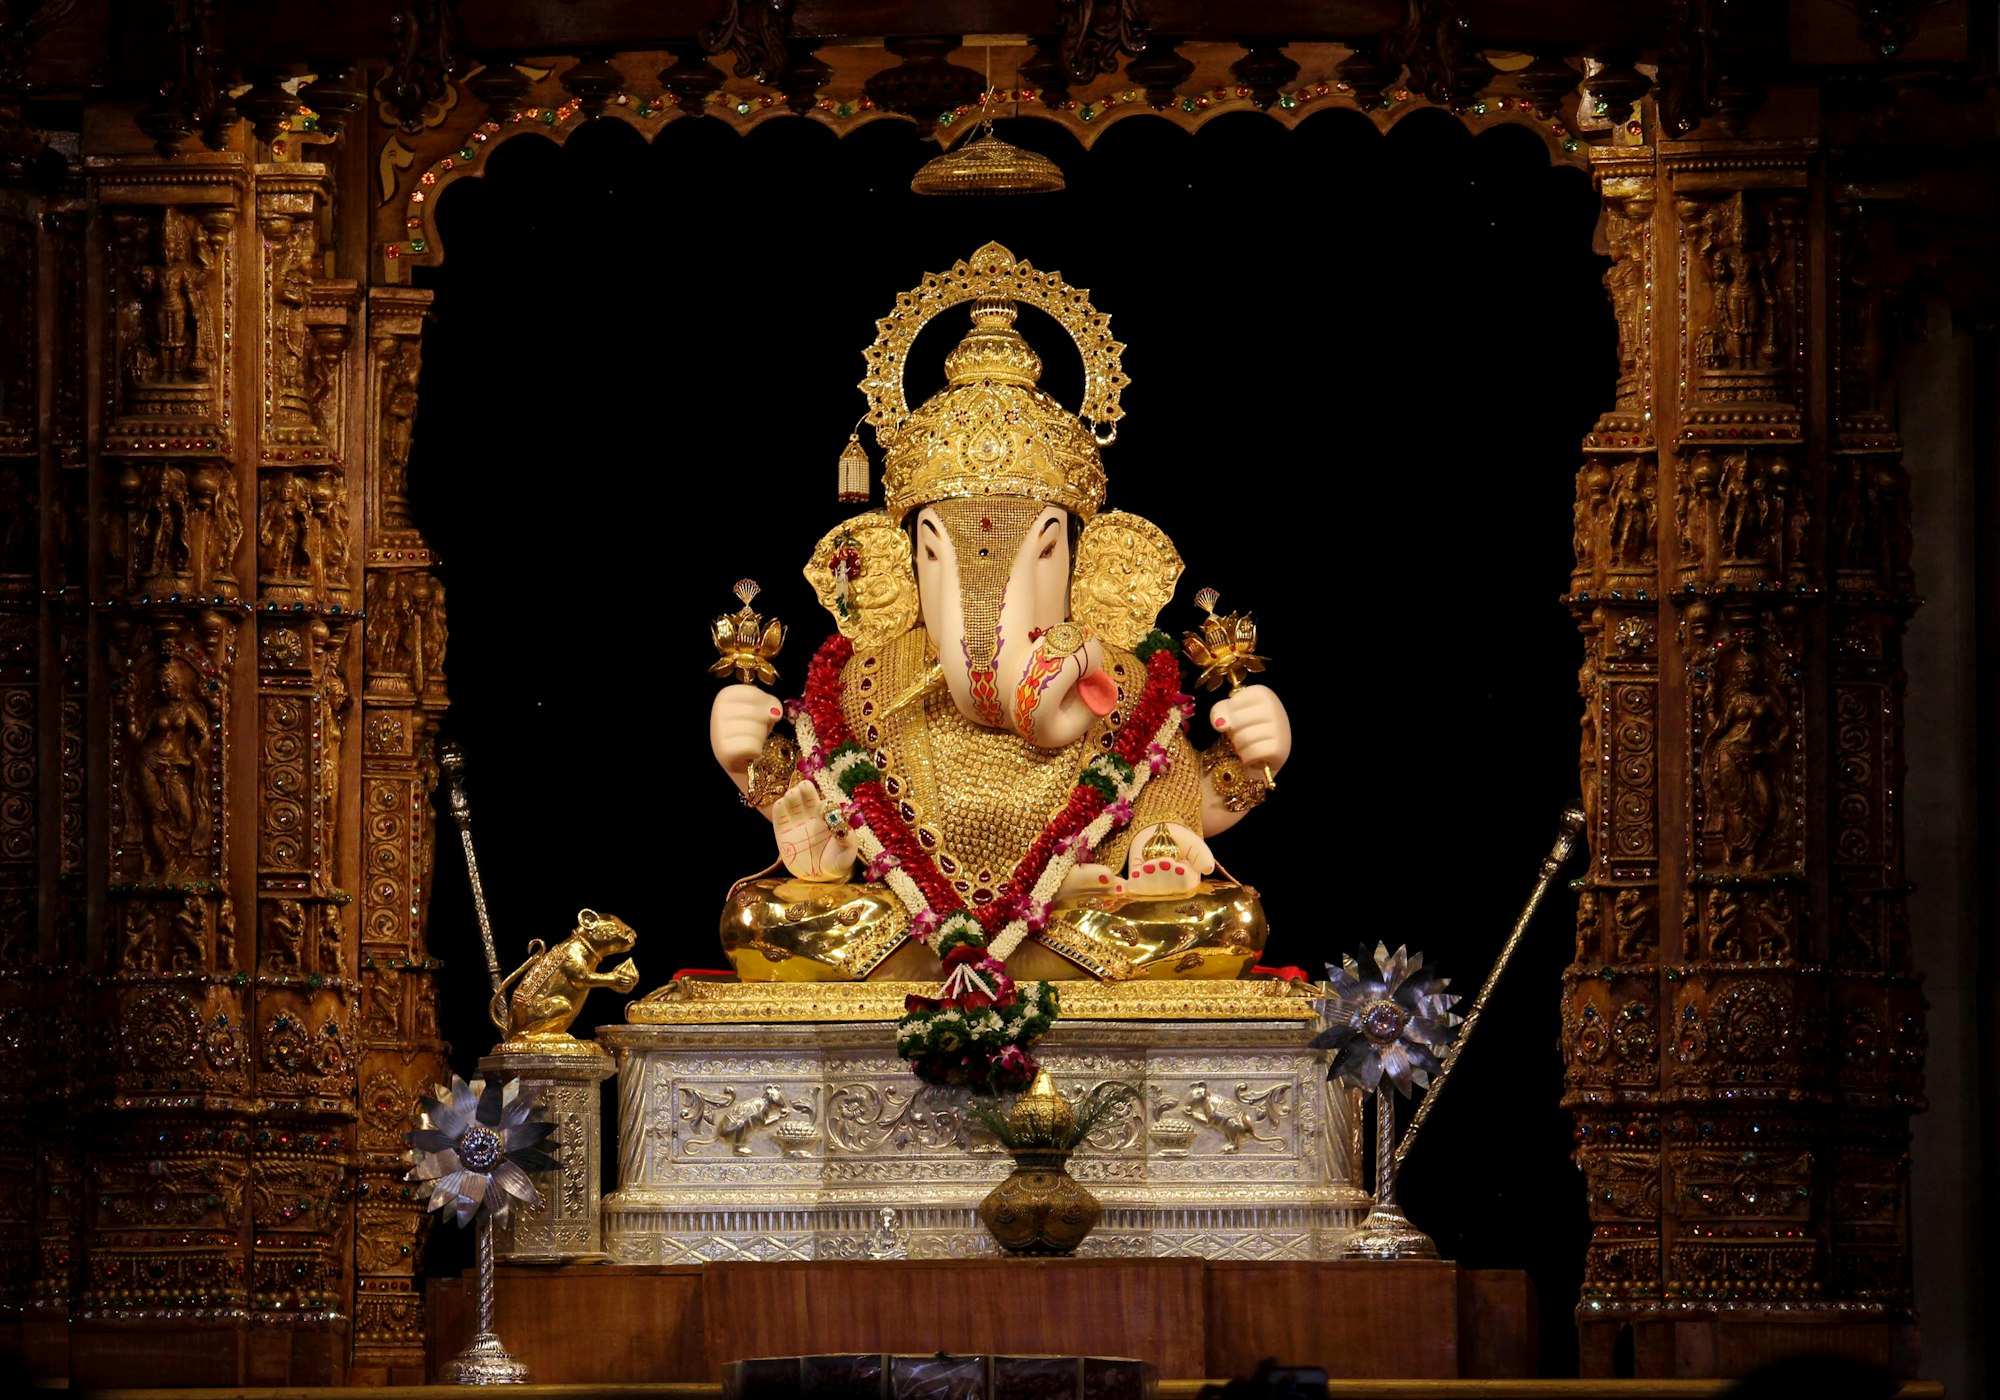 Ganesha Purana and Avatars of Lord Ganesha